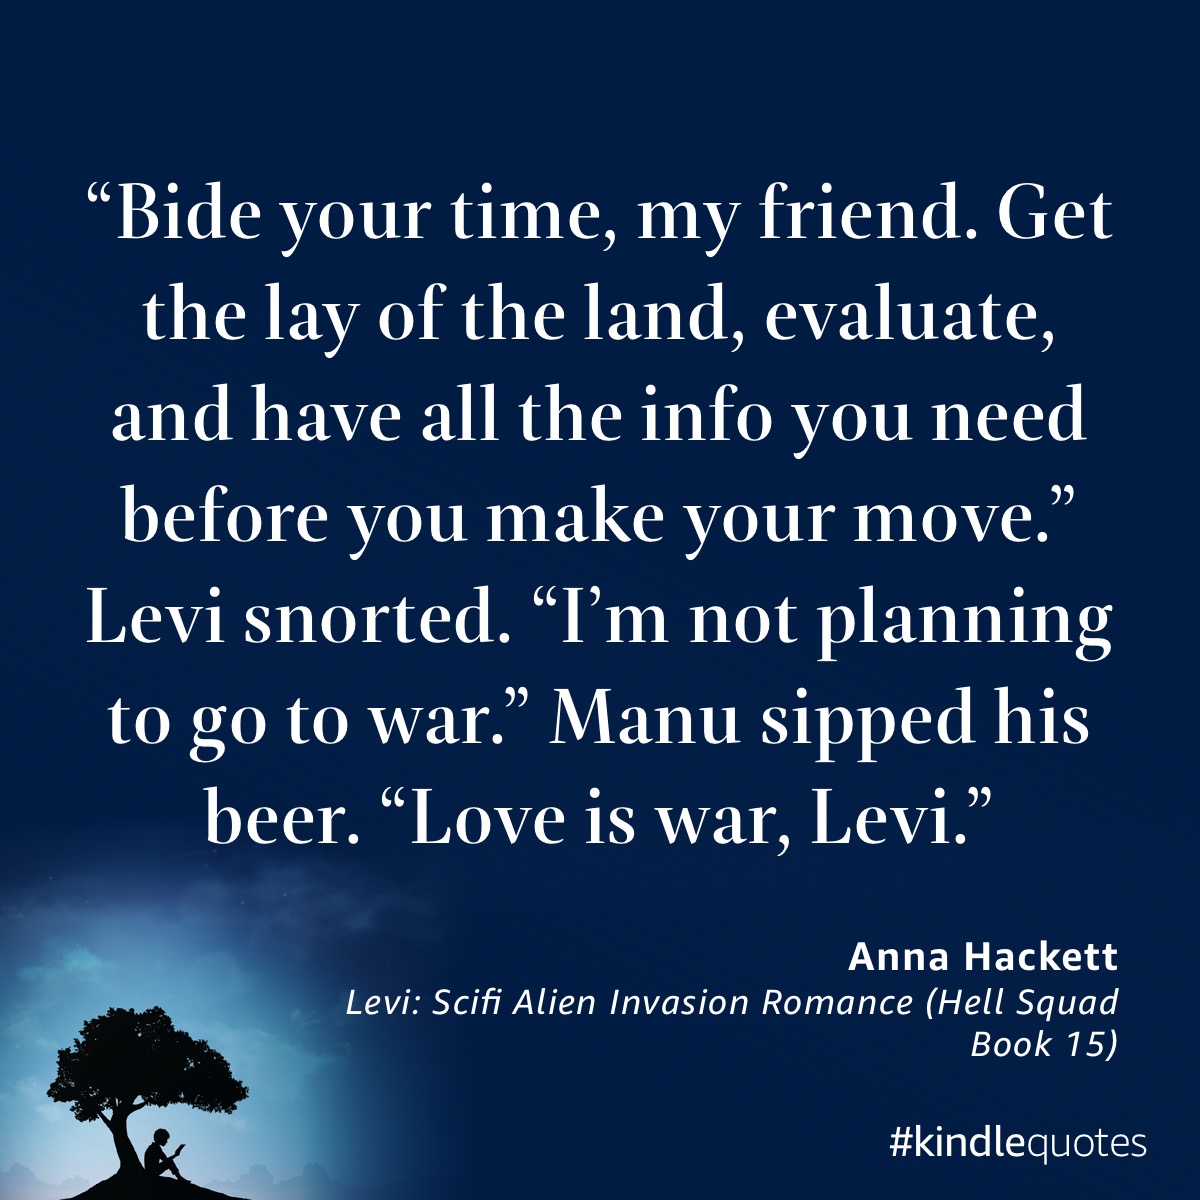 Book quote Anna Hackett